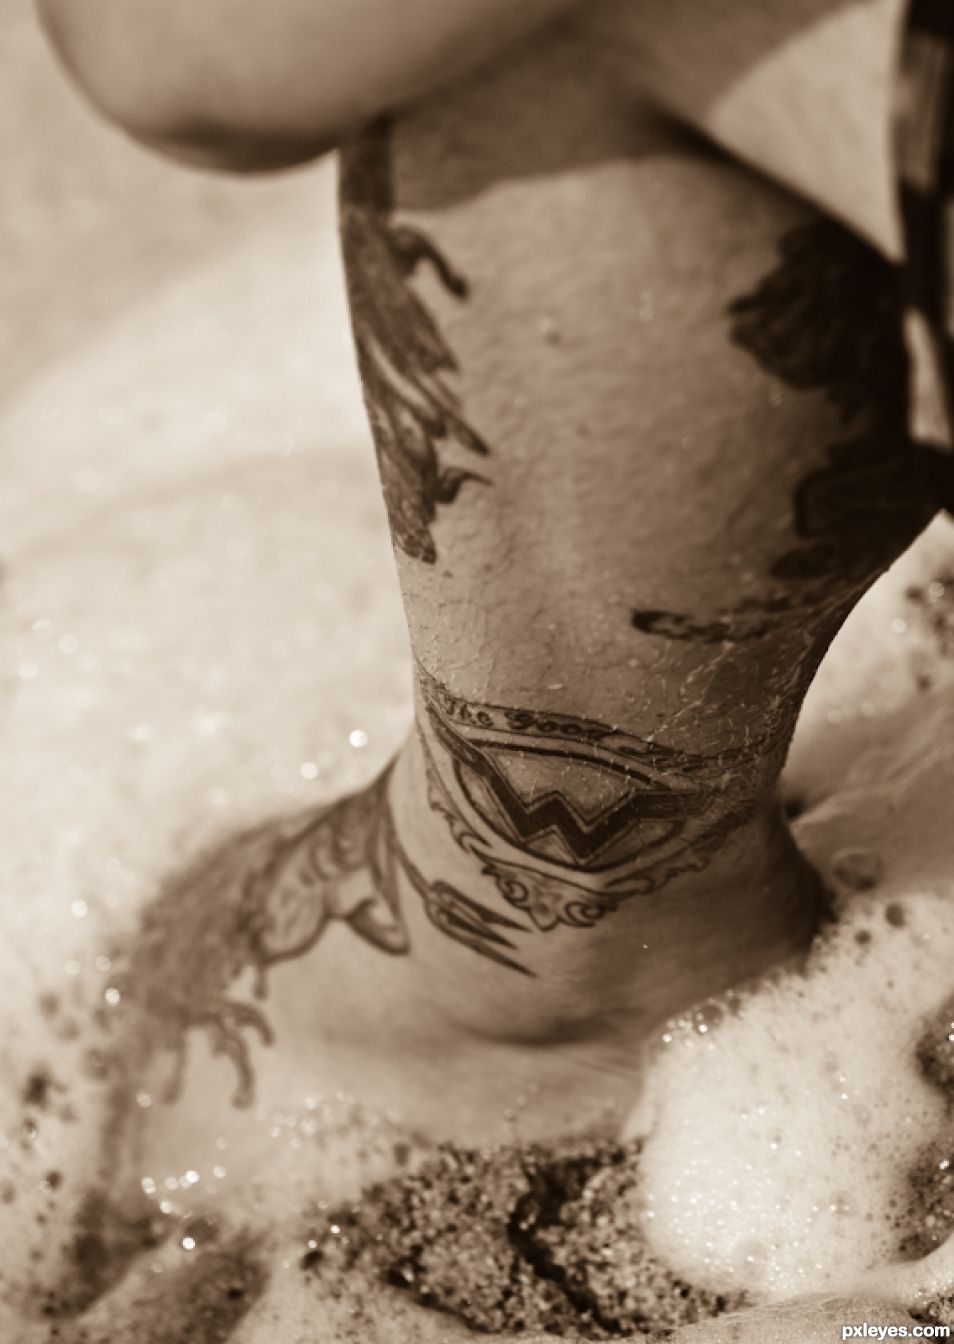 Foamie leg tattoos